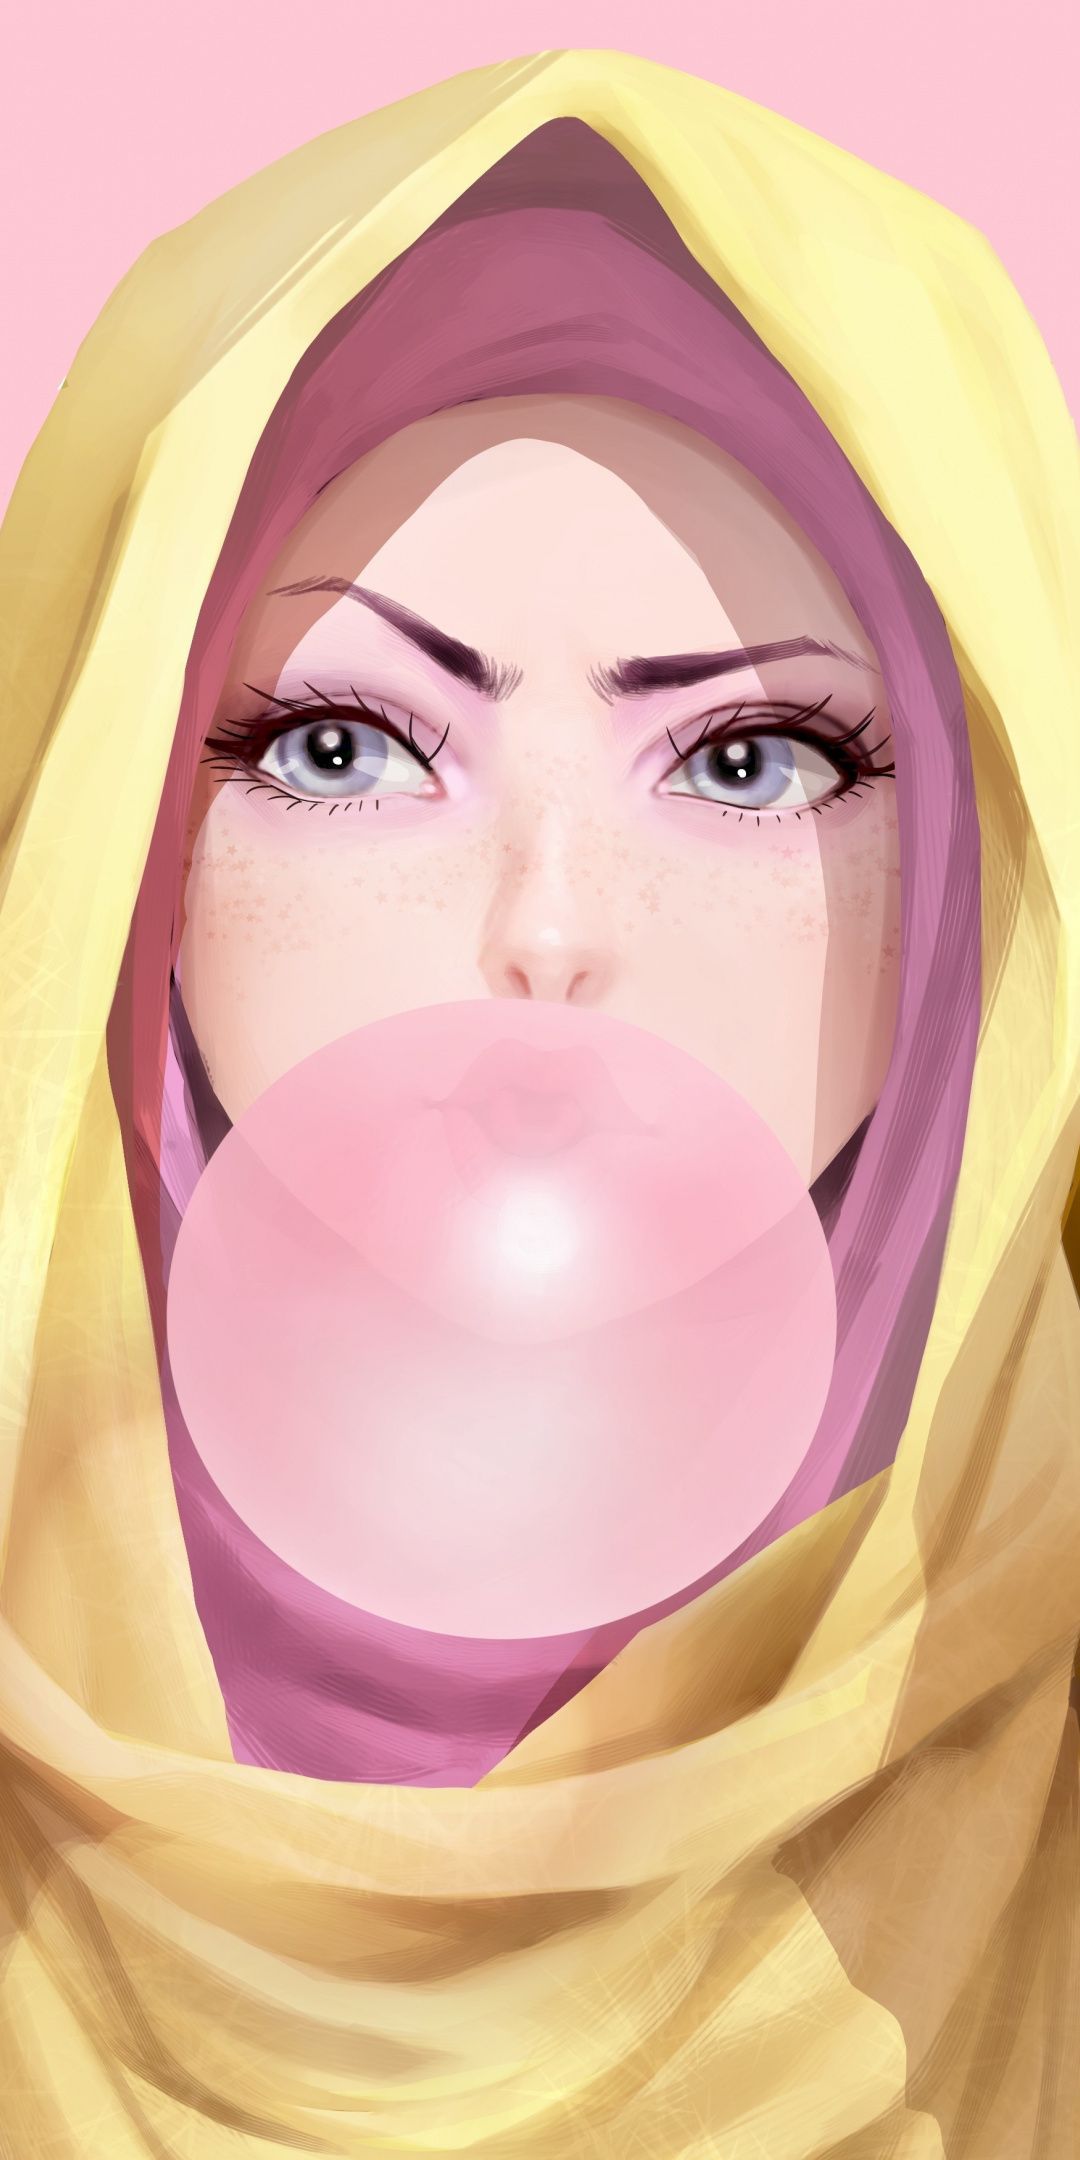 Girl in hood, bubble gum, original, art wallpaper. Bubble gum, Bubbles wallpaper, Blowing bubble gum